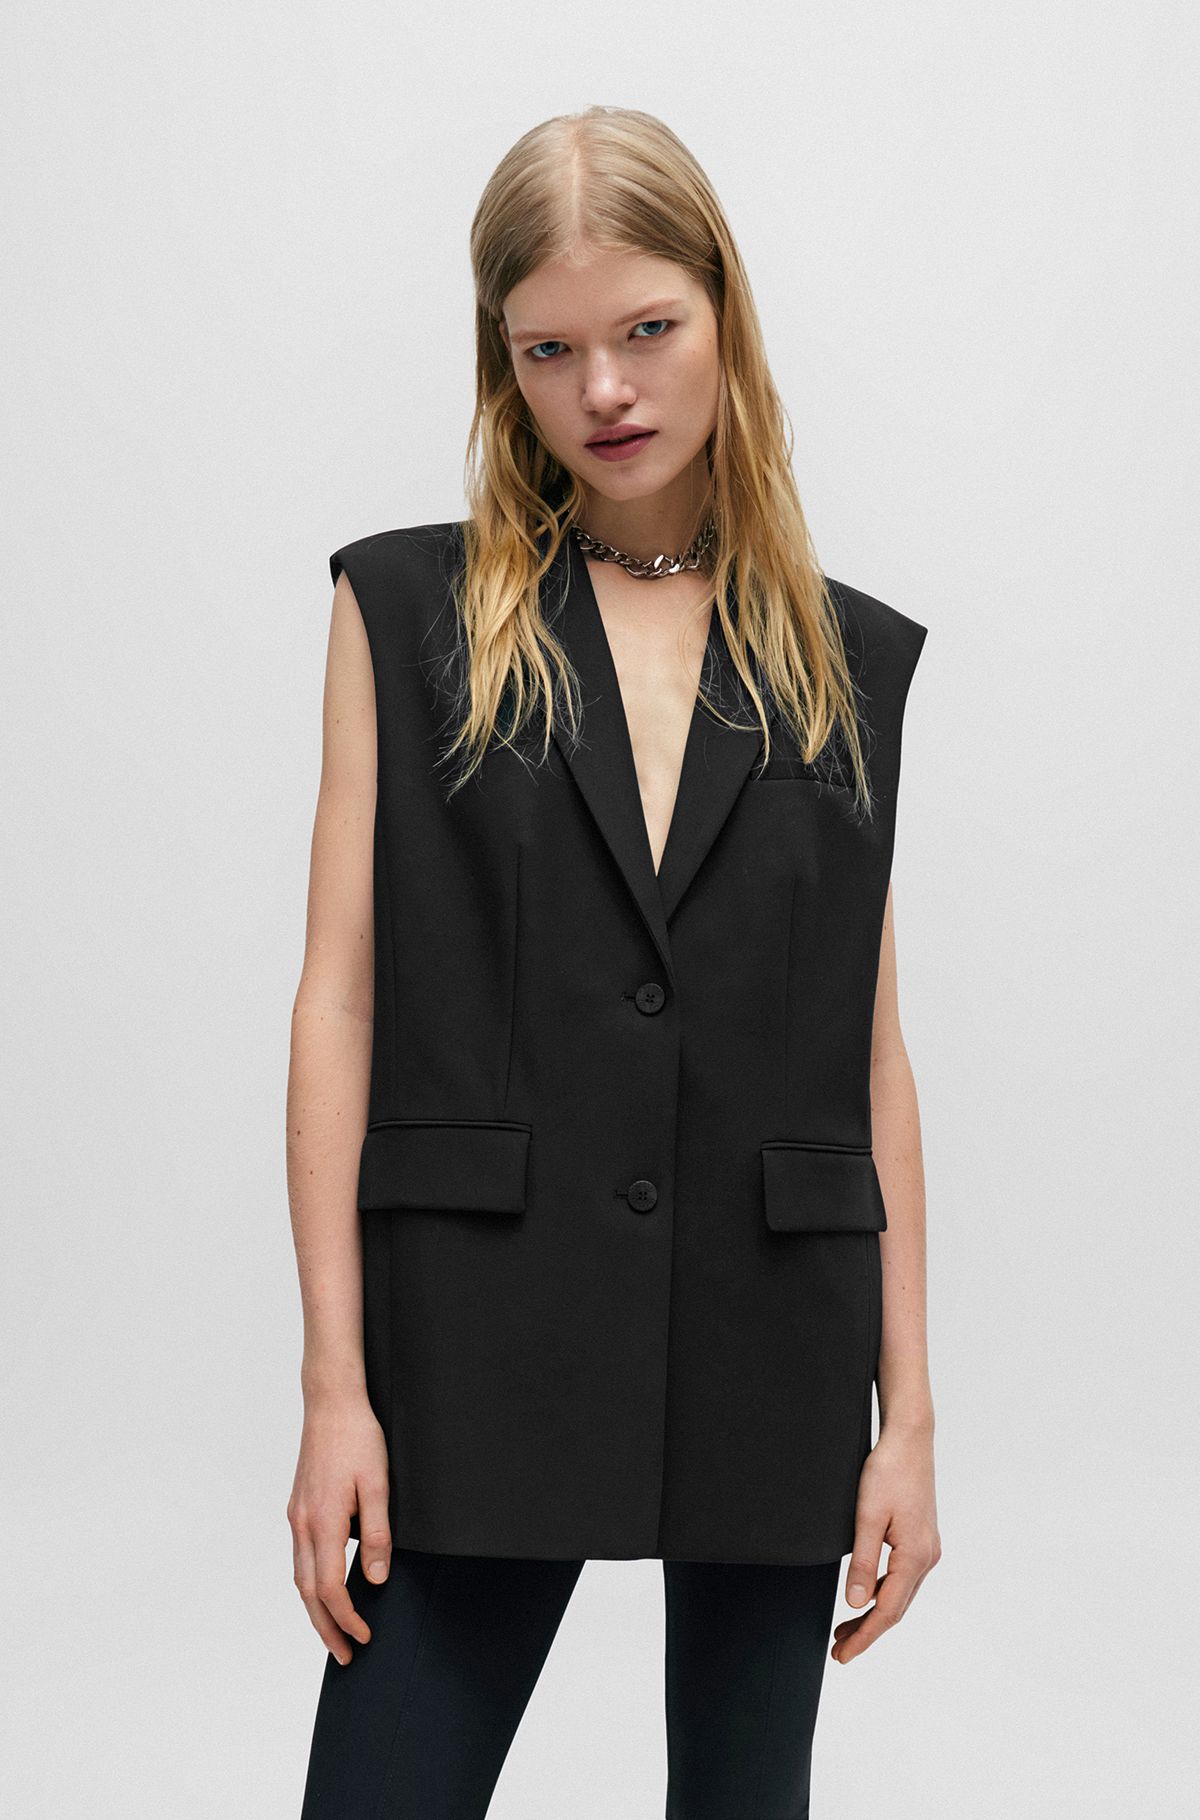 Business Casual Suit Jacket Women Formal Slim One Button Long Sleeve Blazer  Coat